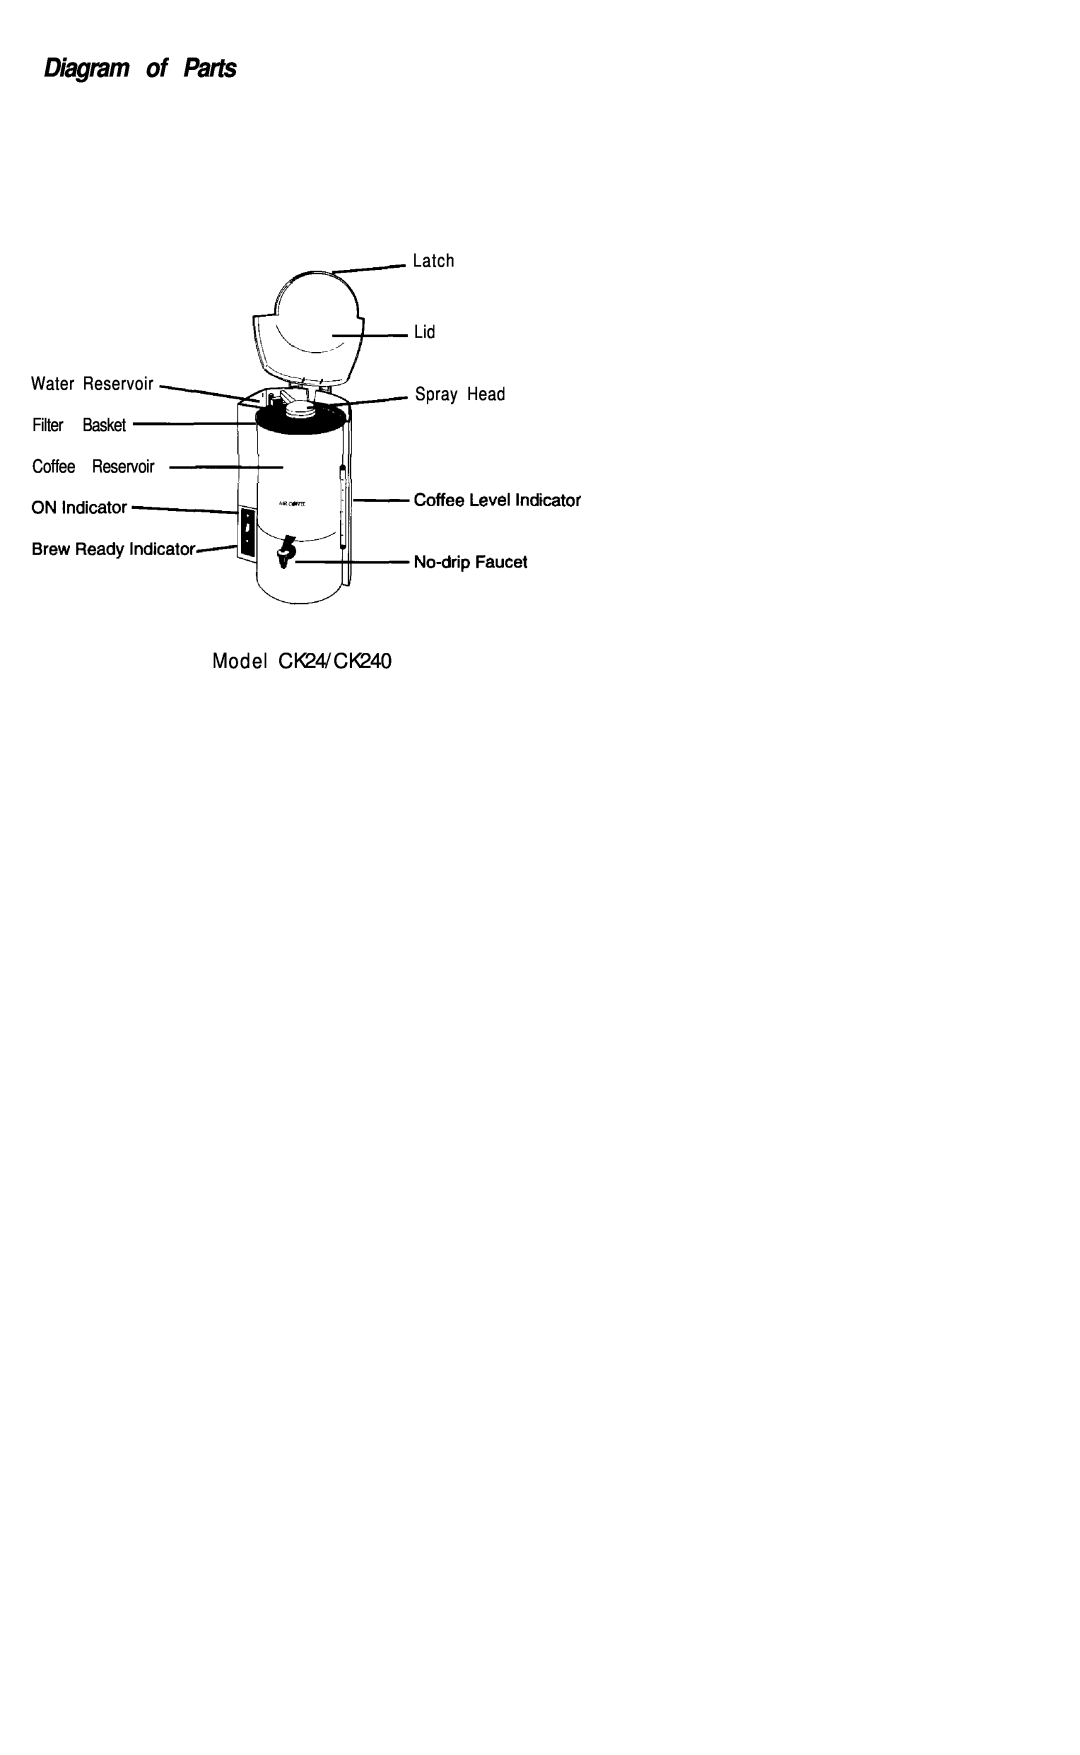 Mr. Coffee manual Diagram of Parts, Model CK24/CK240 